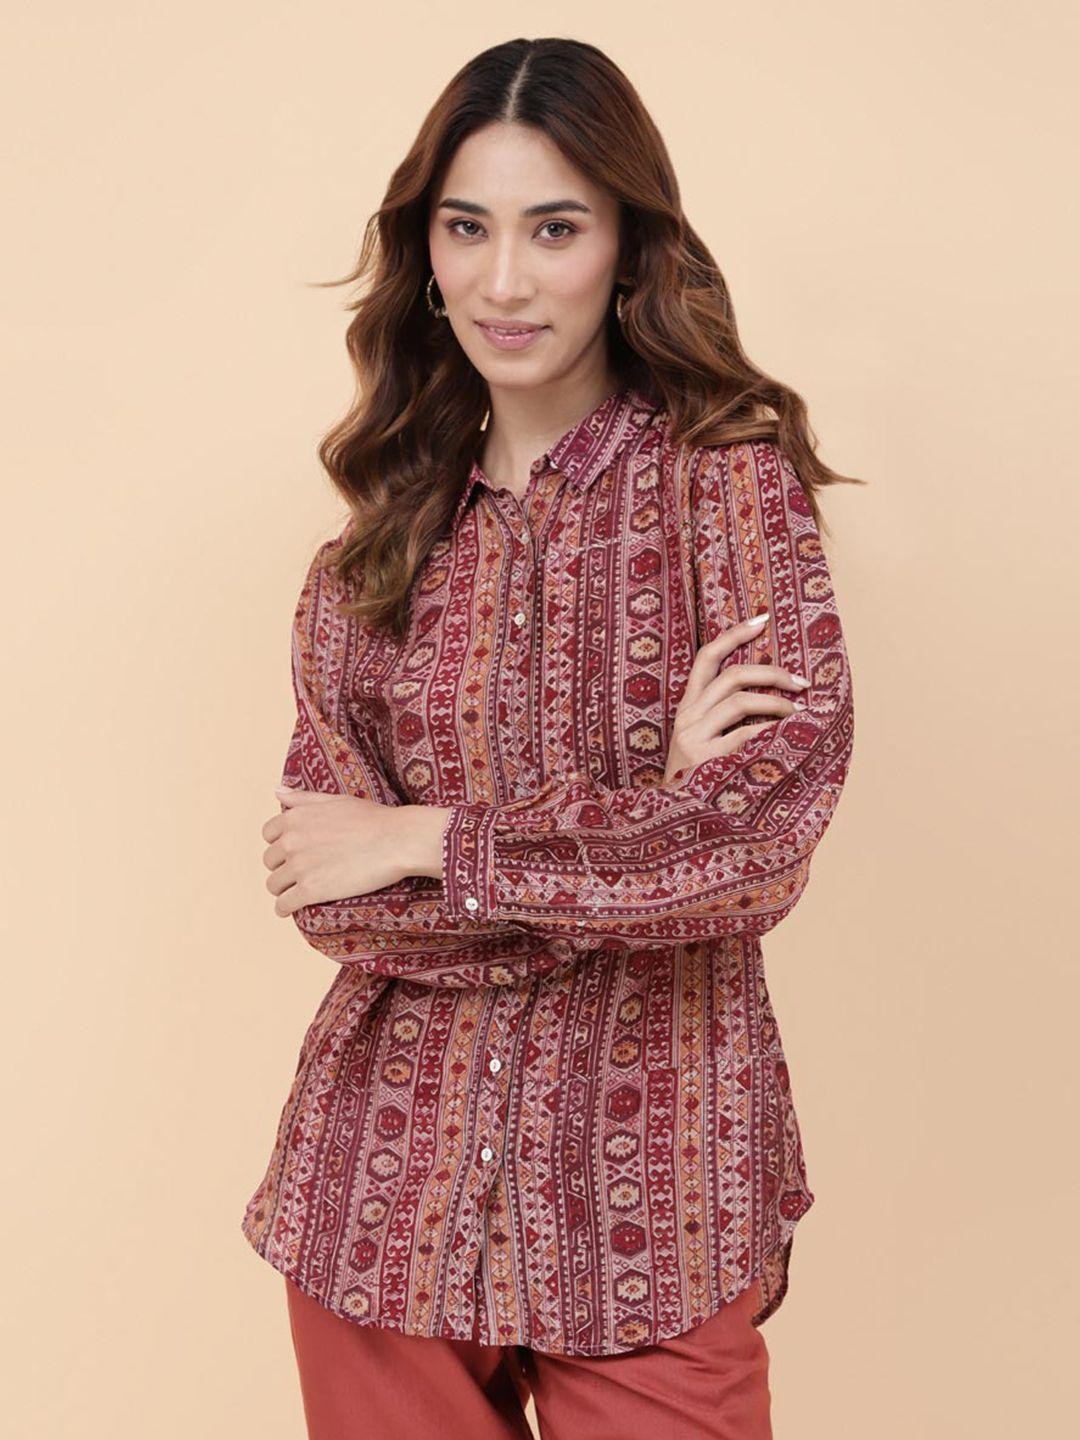 fabindia-ethnic-motifs-printed-spread-collar-casual-shirt